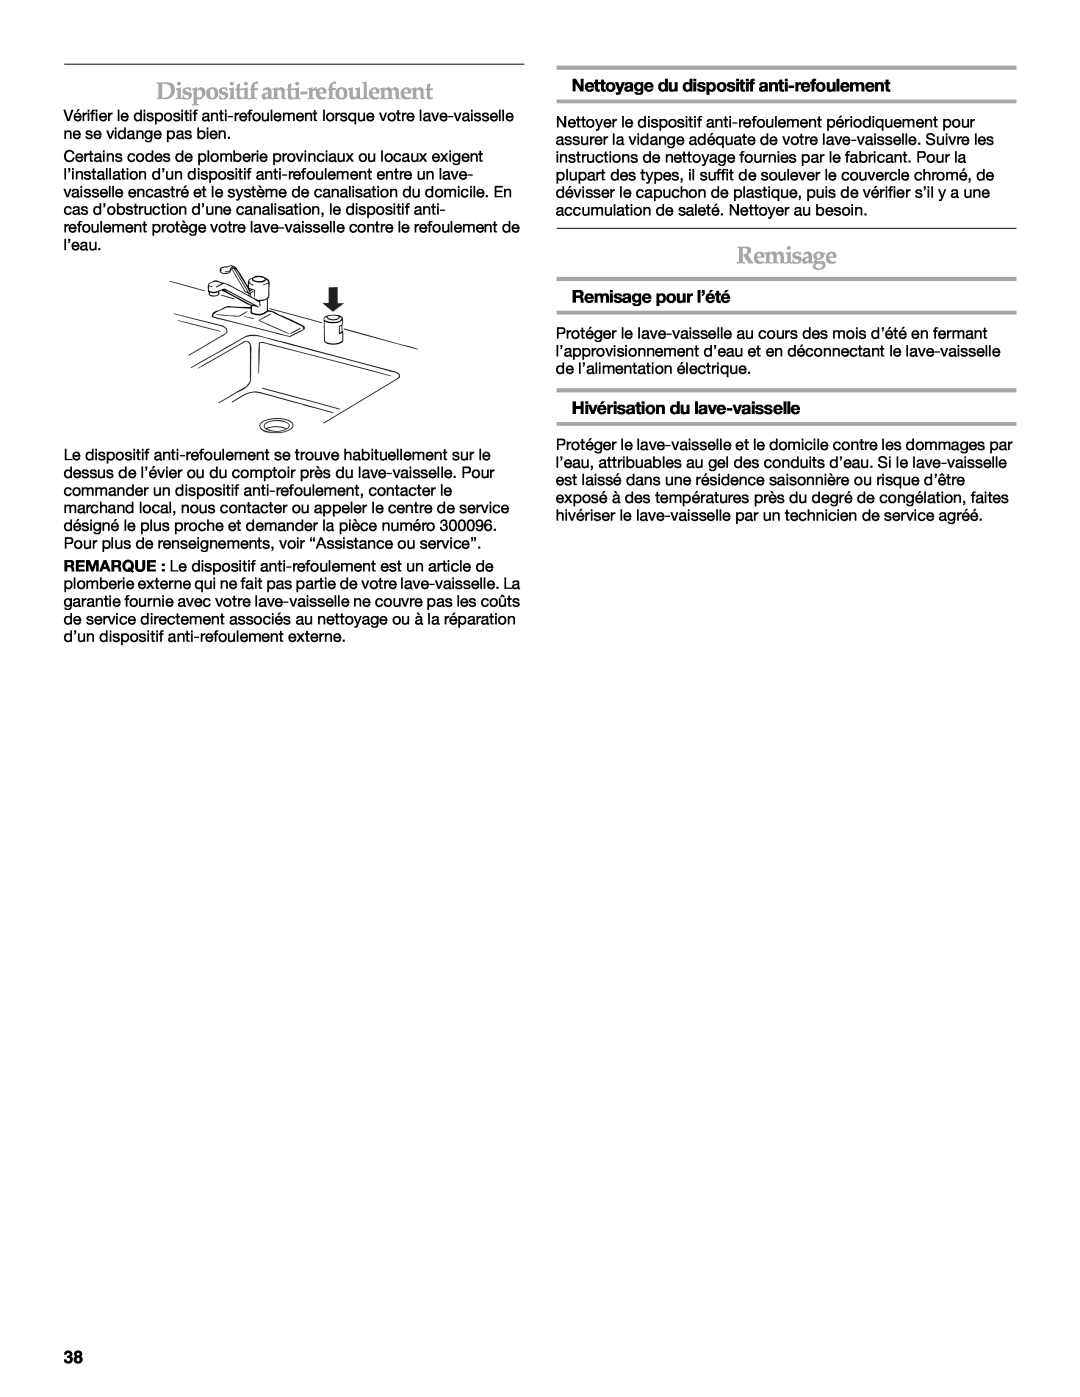 KitchenAid KUDD01DPPA manual Dispositif anti-refoulement, Nettoyage du dispositif anti-refoulement, Remisage pour l’été 